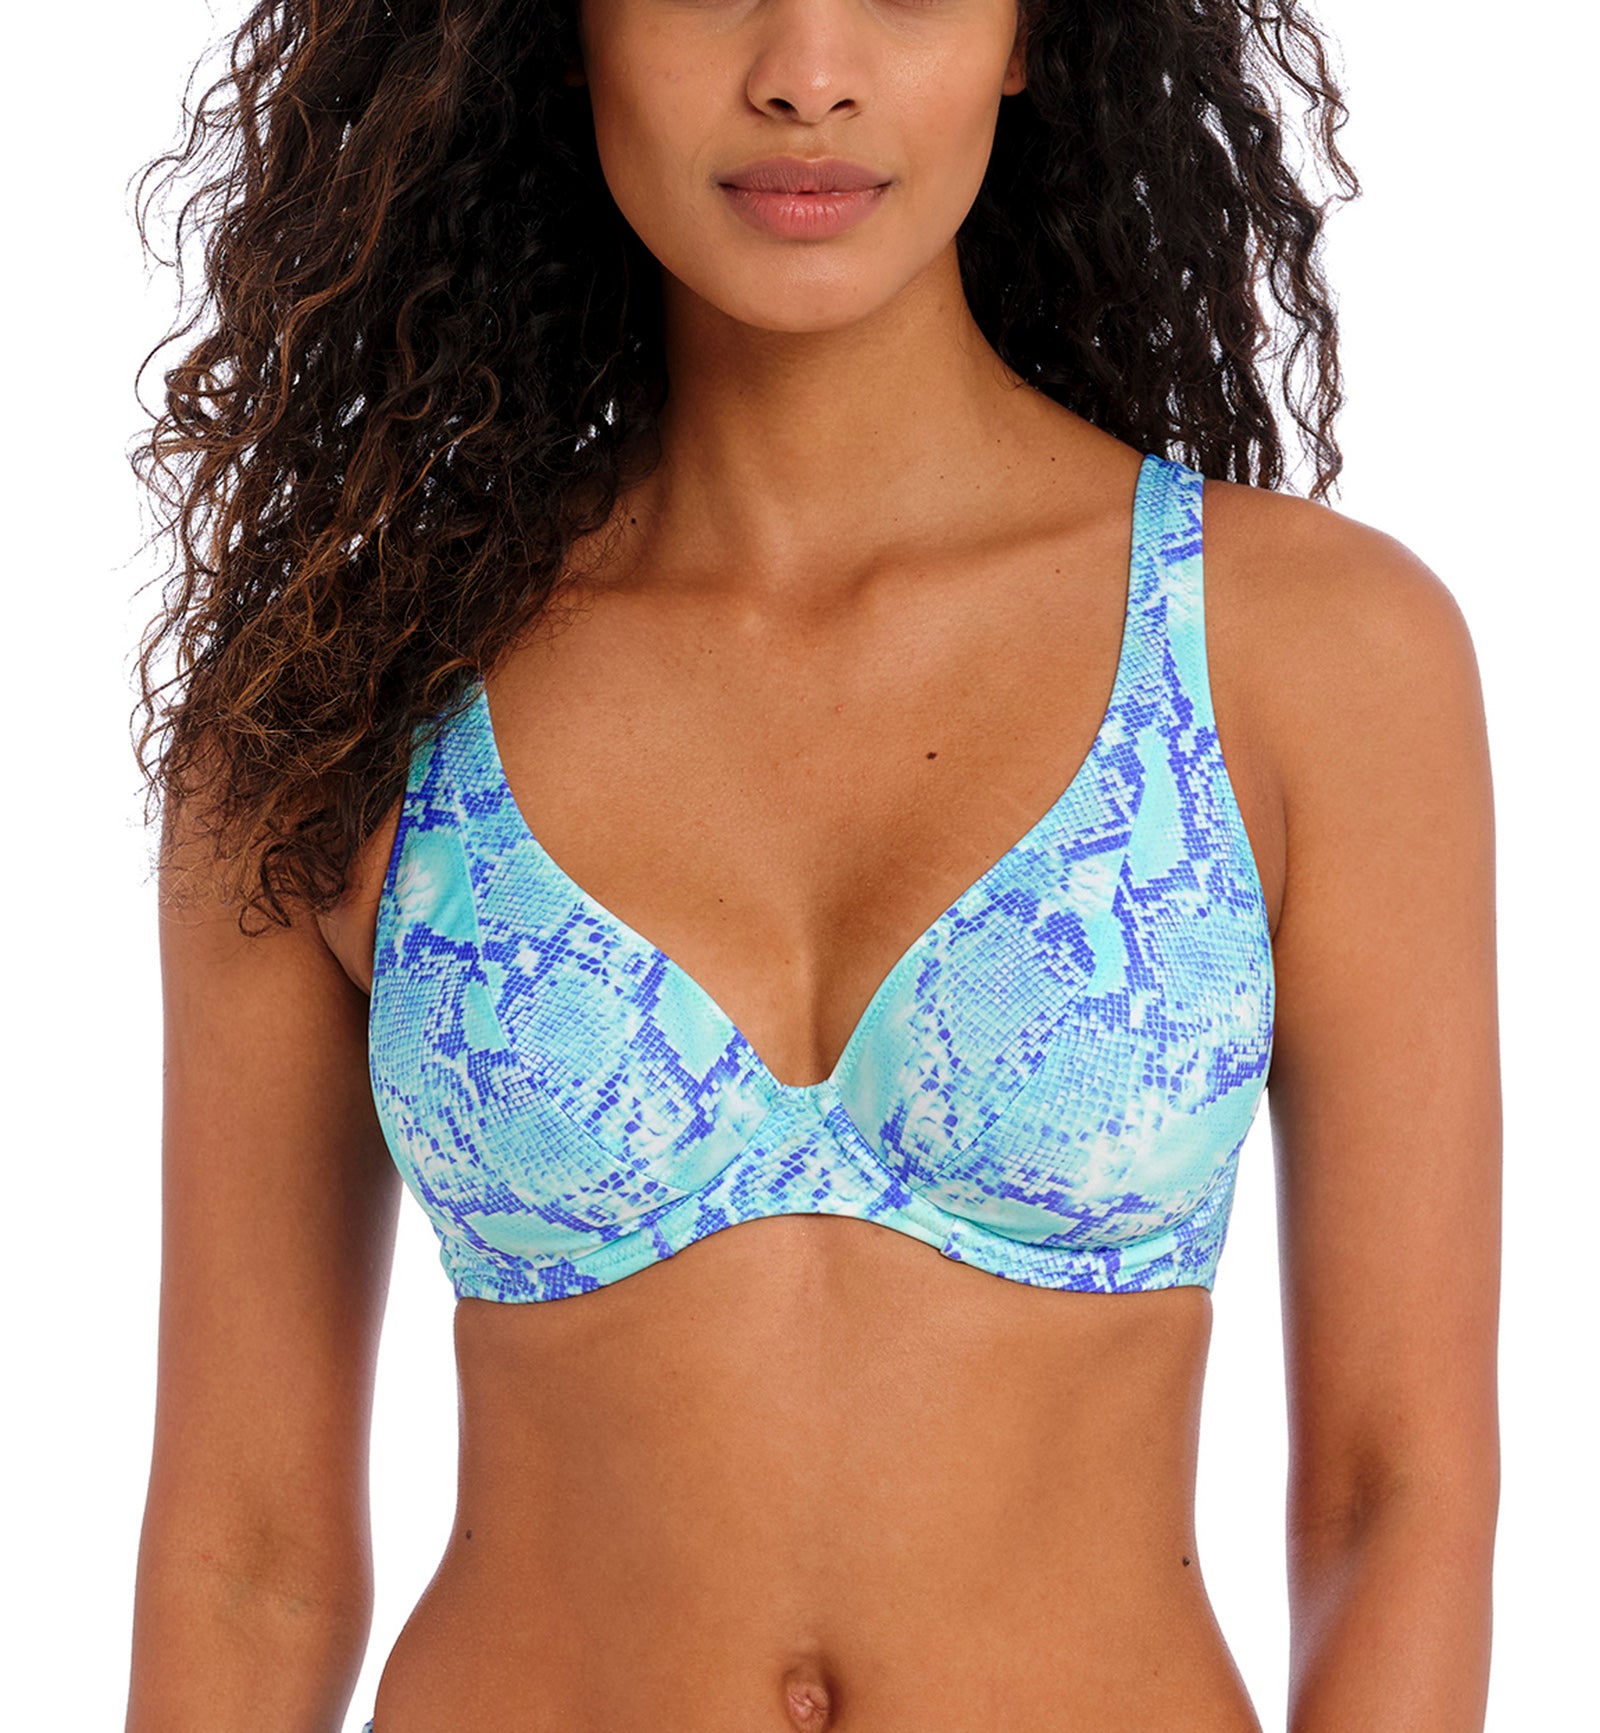 Freya Komodo Bay Underwire High Apex Bikini Top (204013),30GG,Aqua - Aqua,30GG